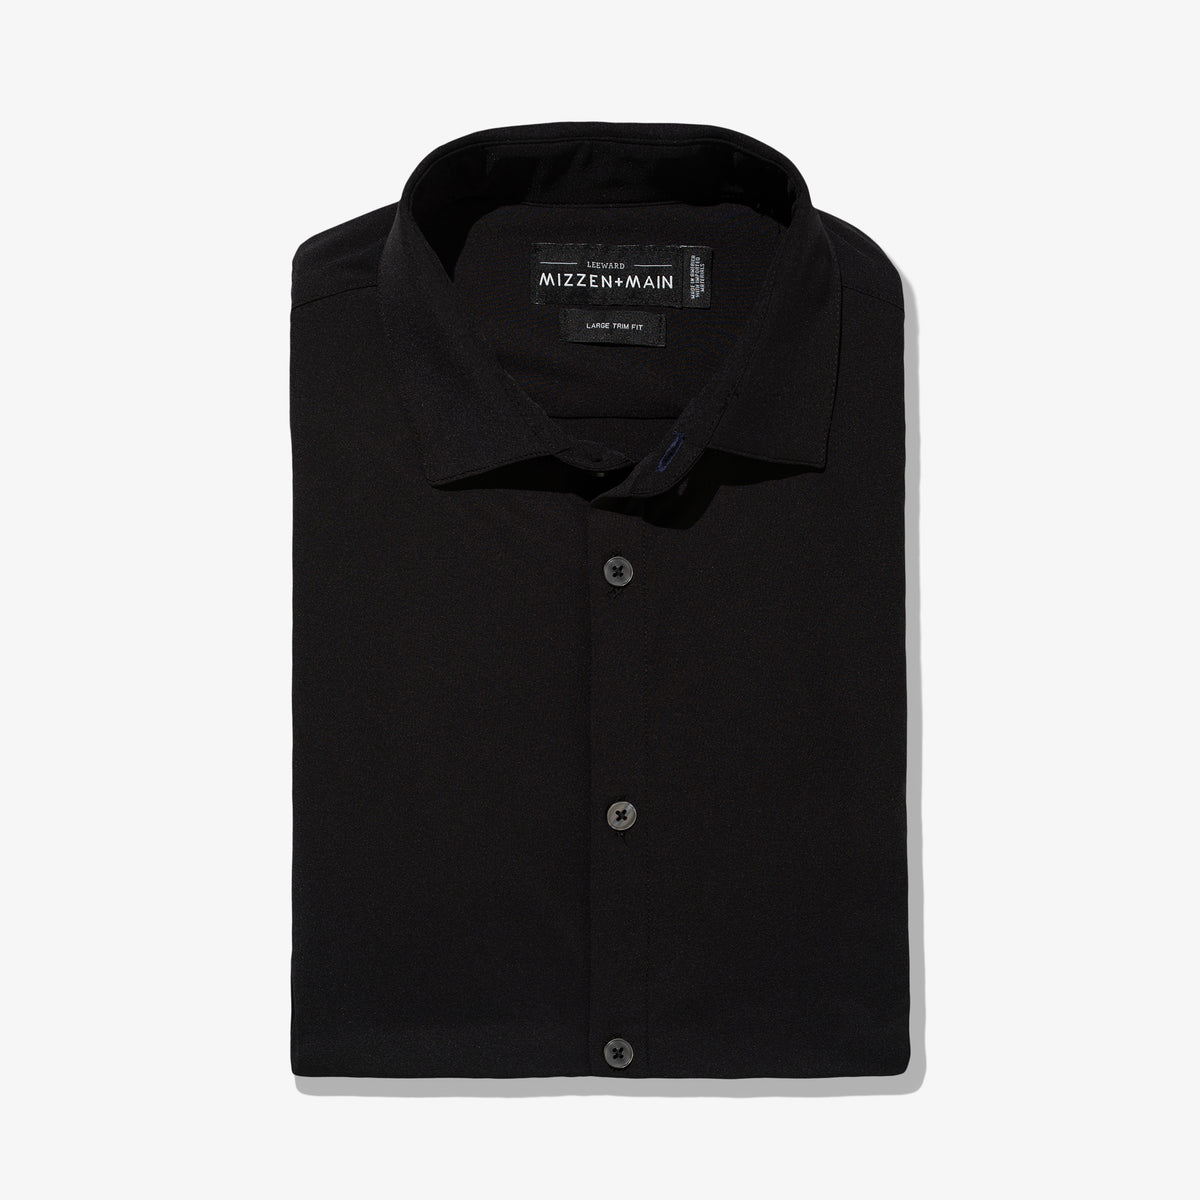 2019 Leeward Dress Shirt - Solid Black ...